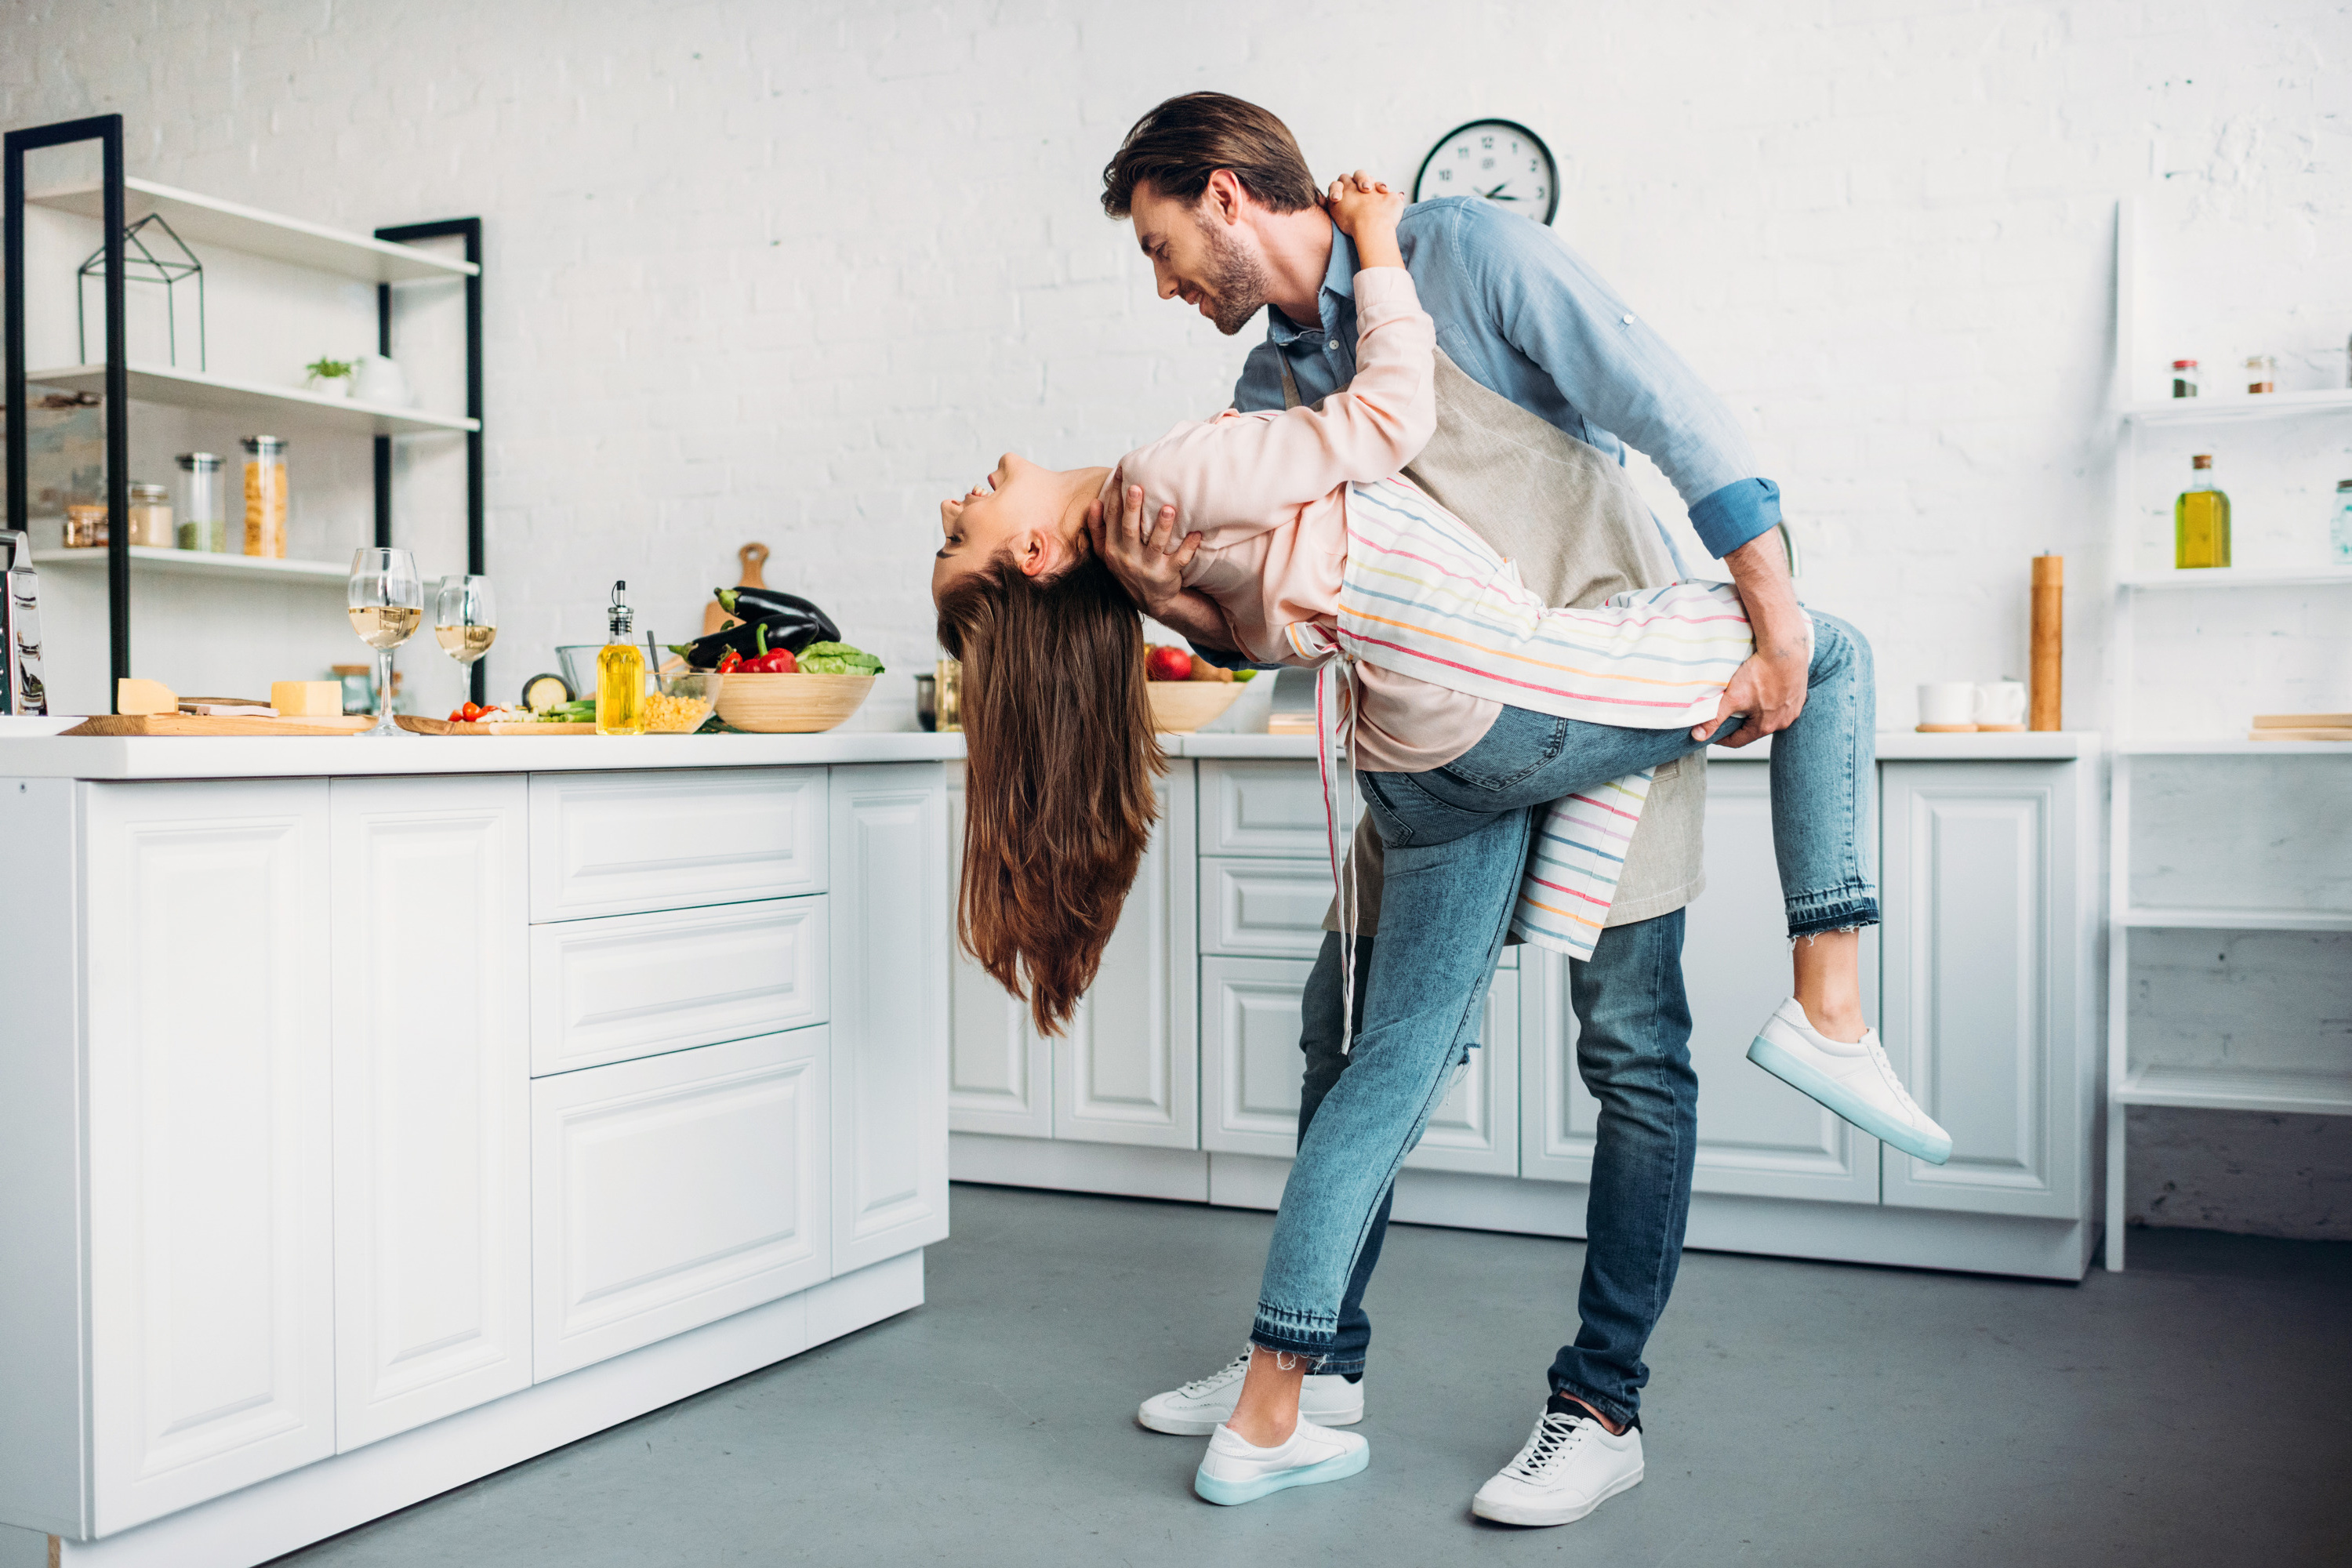 Живущие вместе видео. Влюбленные на кухне. Танцы на кухне. Фотосессия пар на кухне. Мужчина и женщина на кухне.